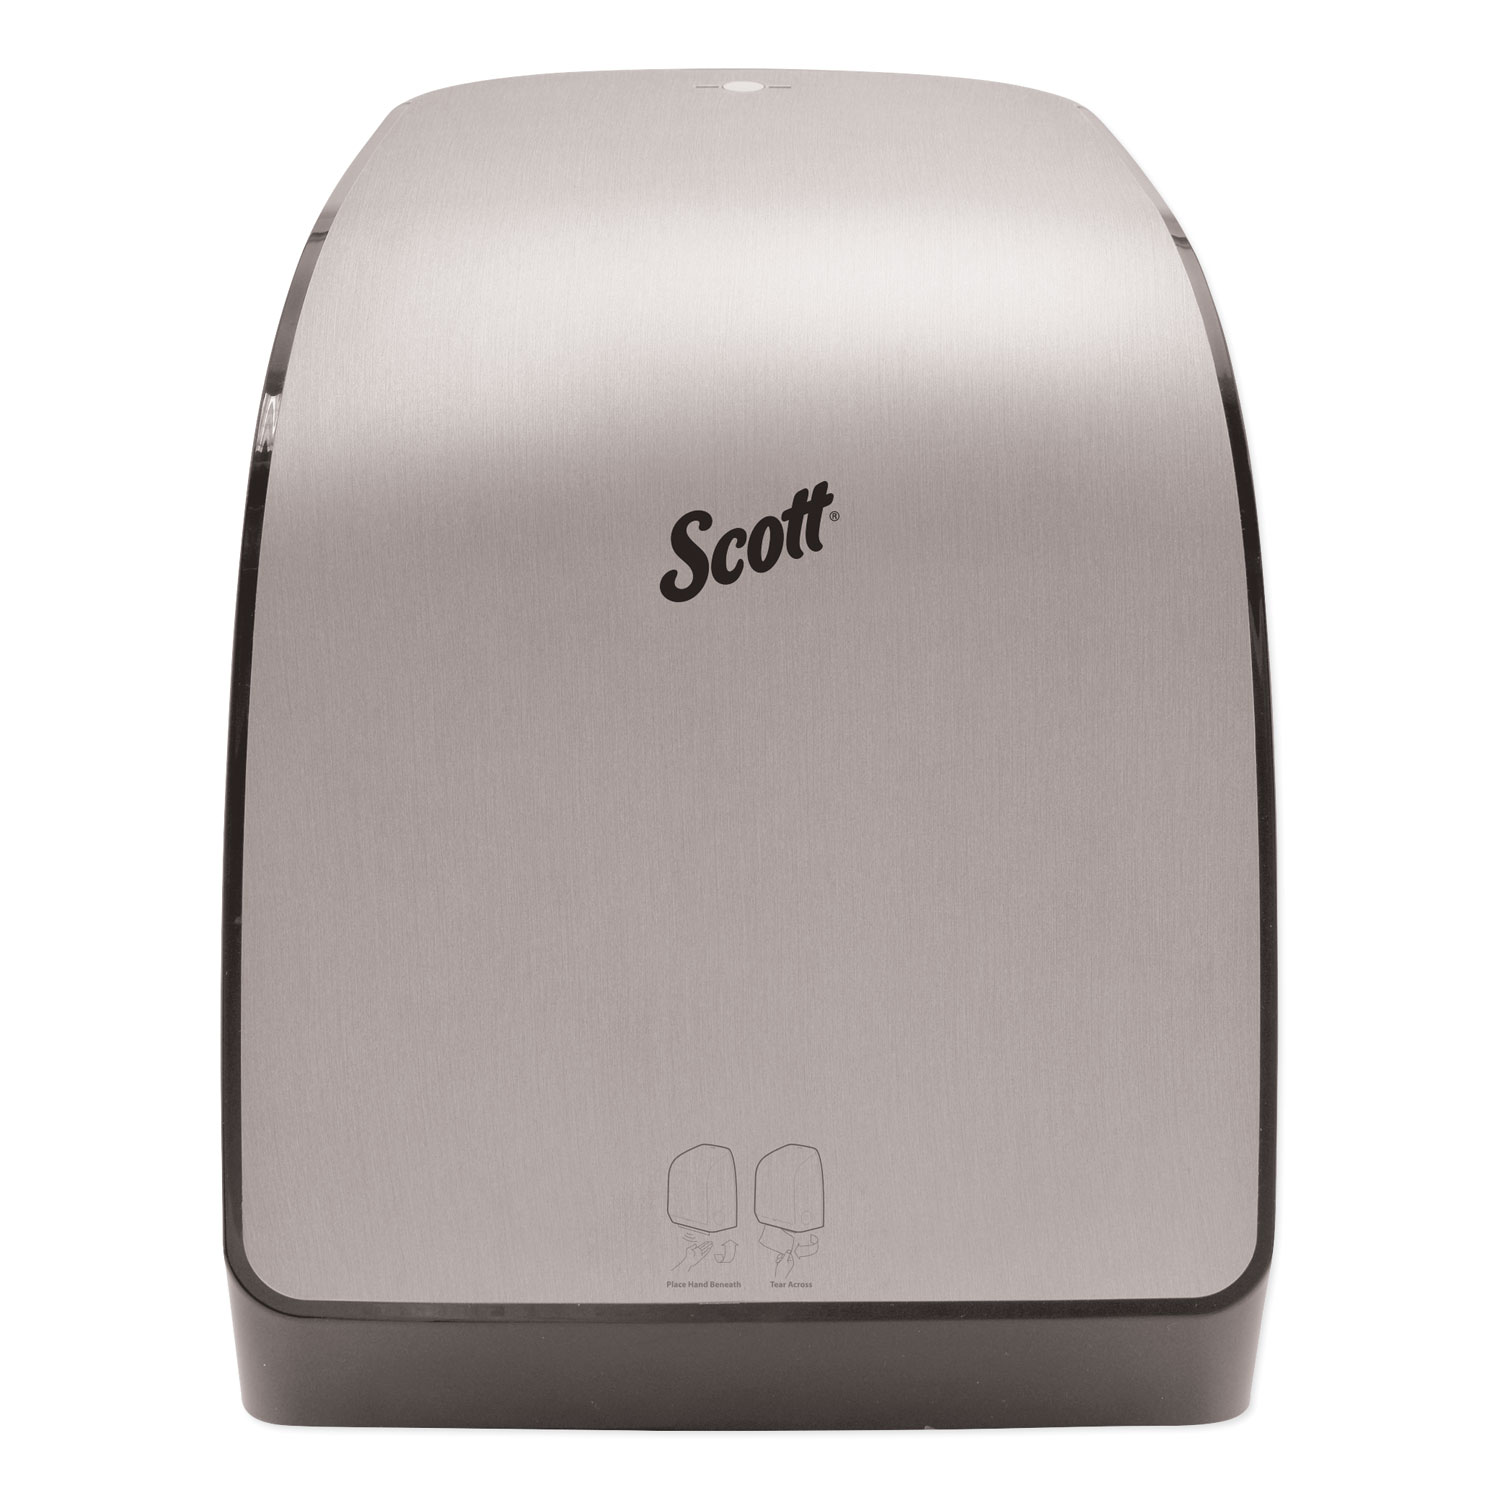  Scott 35609 Pro Electronic Hard Roll Towel Dispenser, 12.66 x 9.18 x 16.44, Brushed Silver (KCC35609) 